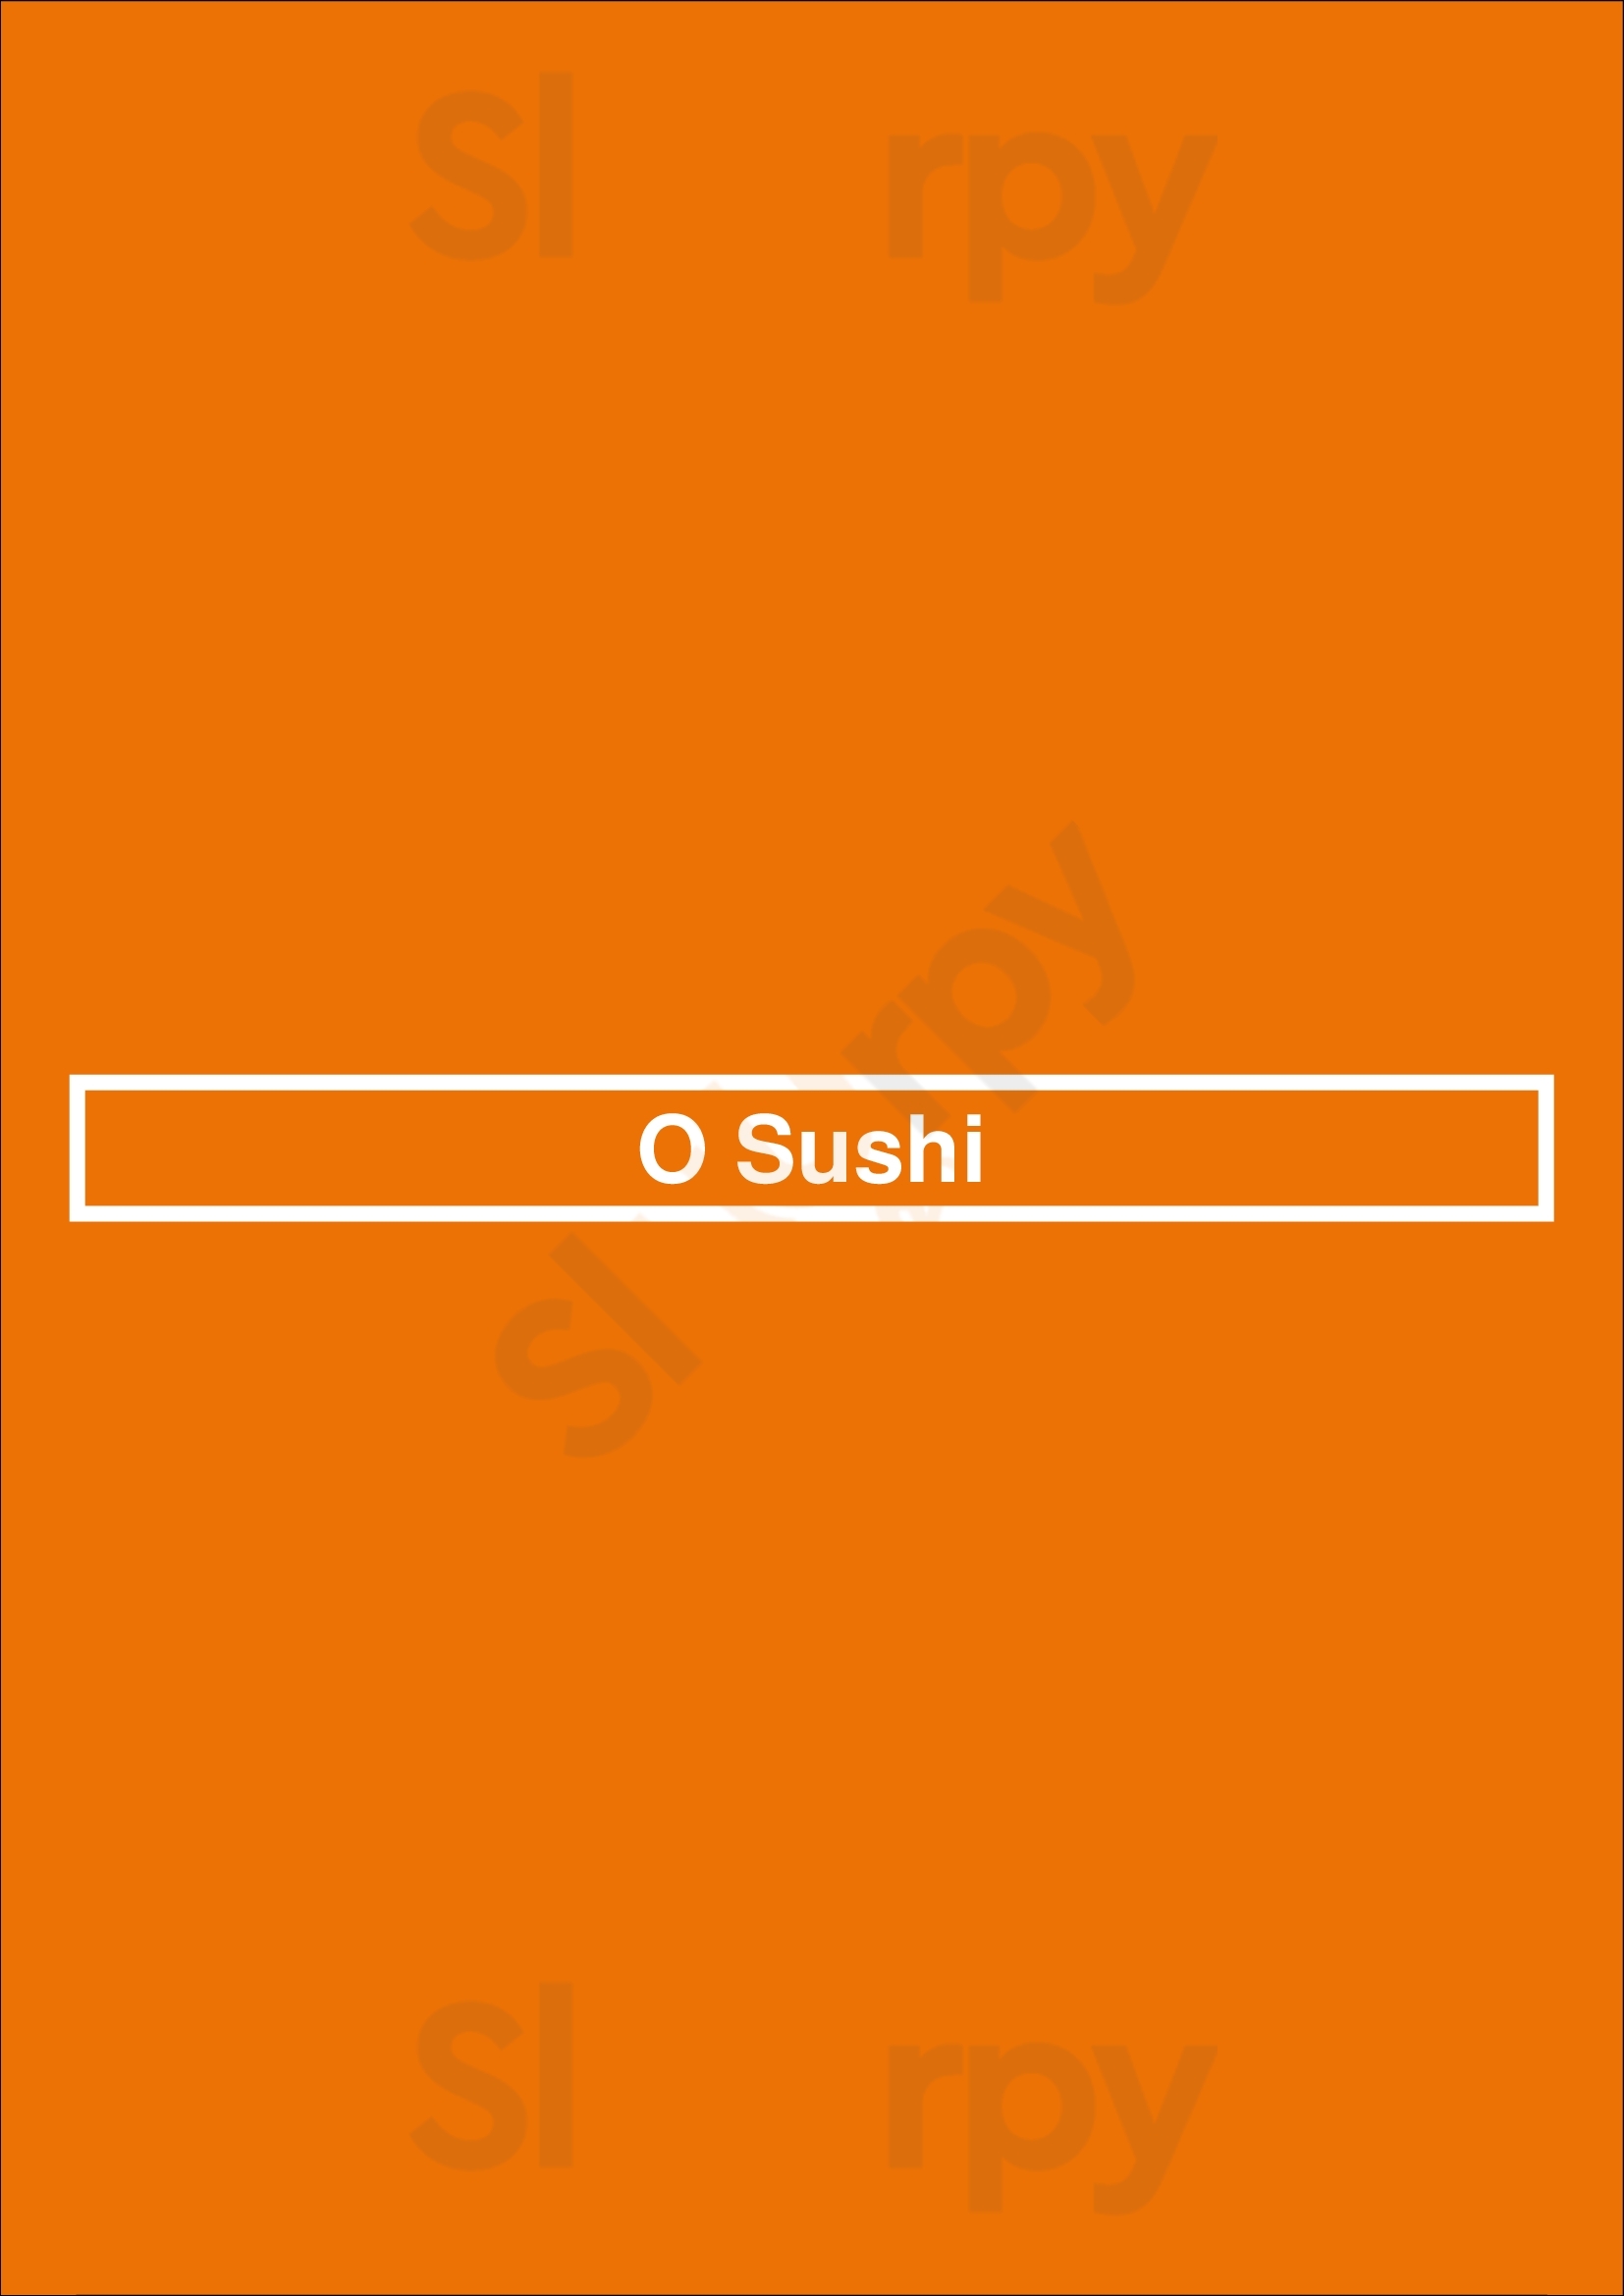 O Sushi Los Angeles Menu - 1